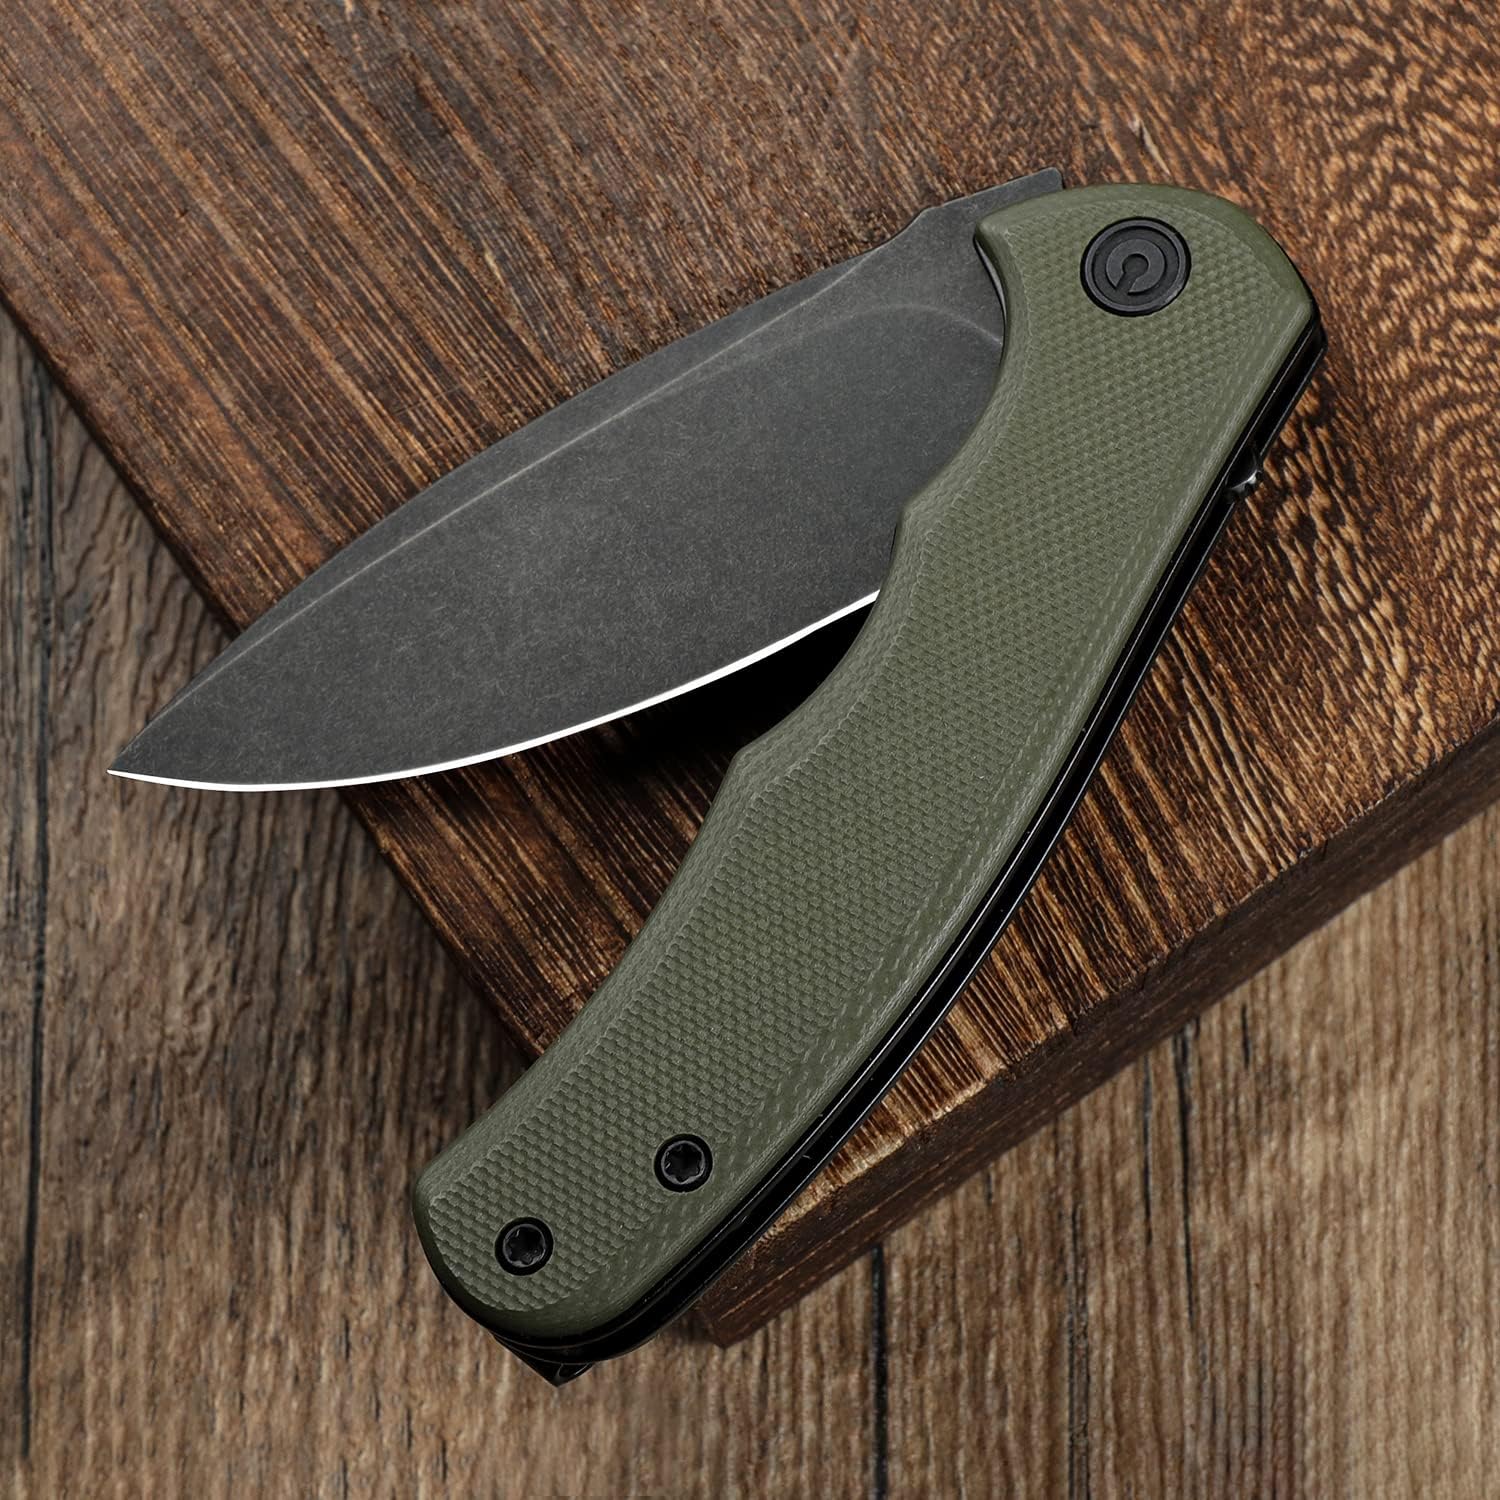 WeKnife CIVIVI Mini Praxis Folding Pocket Knife, 2.98" D2 Steel Blade G10 Handle Small EDC Knife with Pocket Clip for Men Women, S